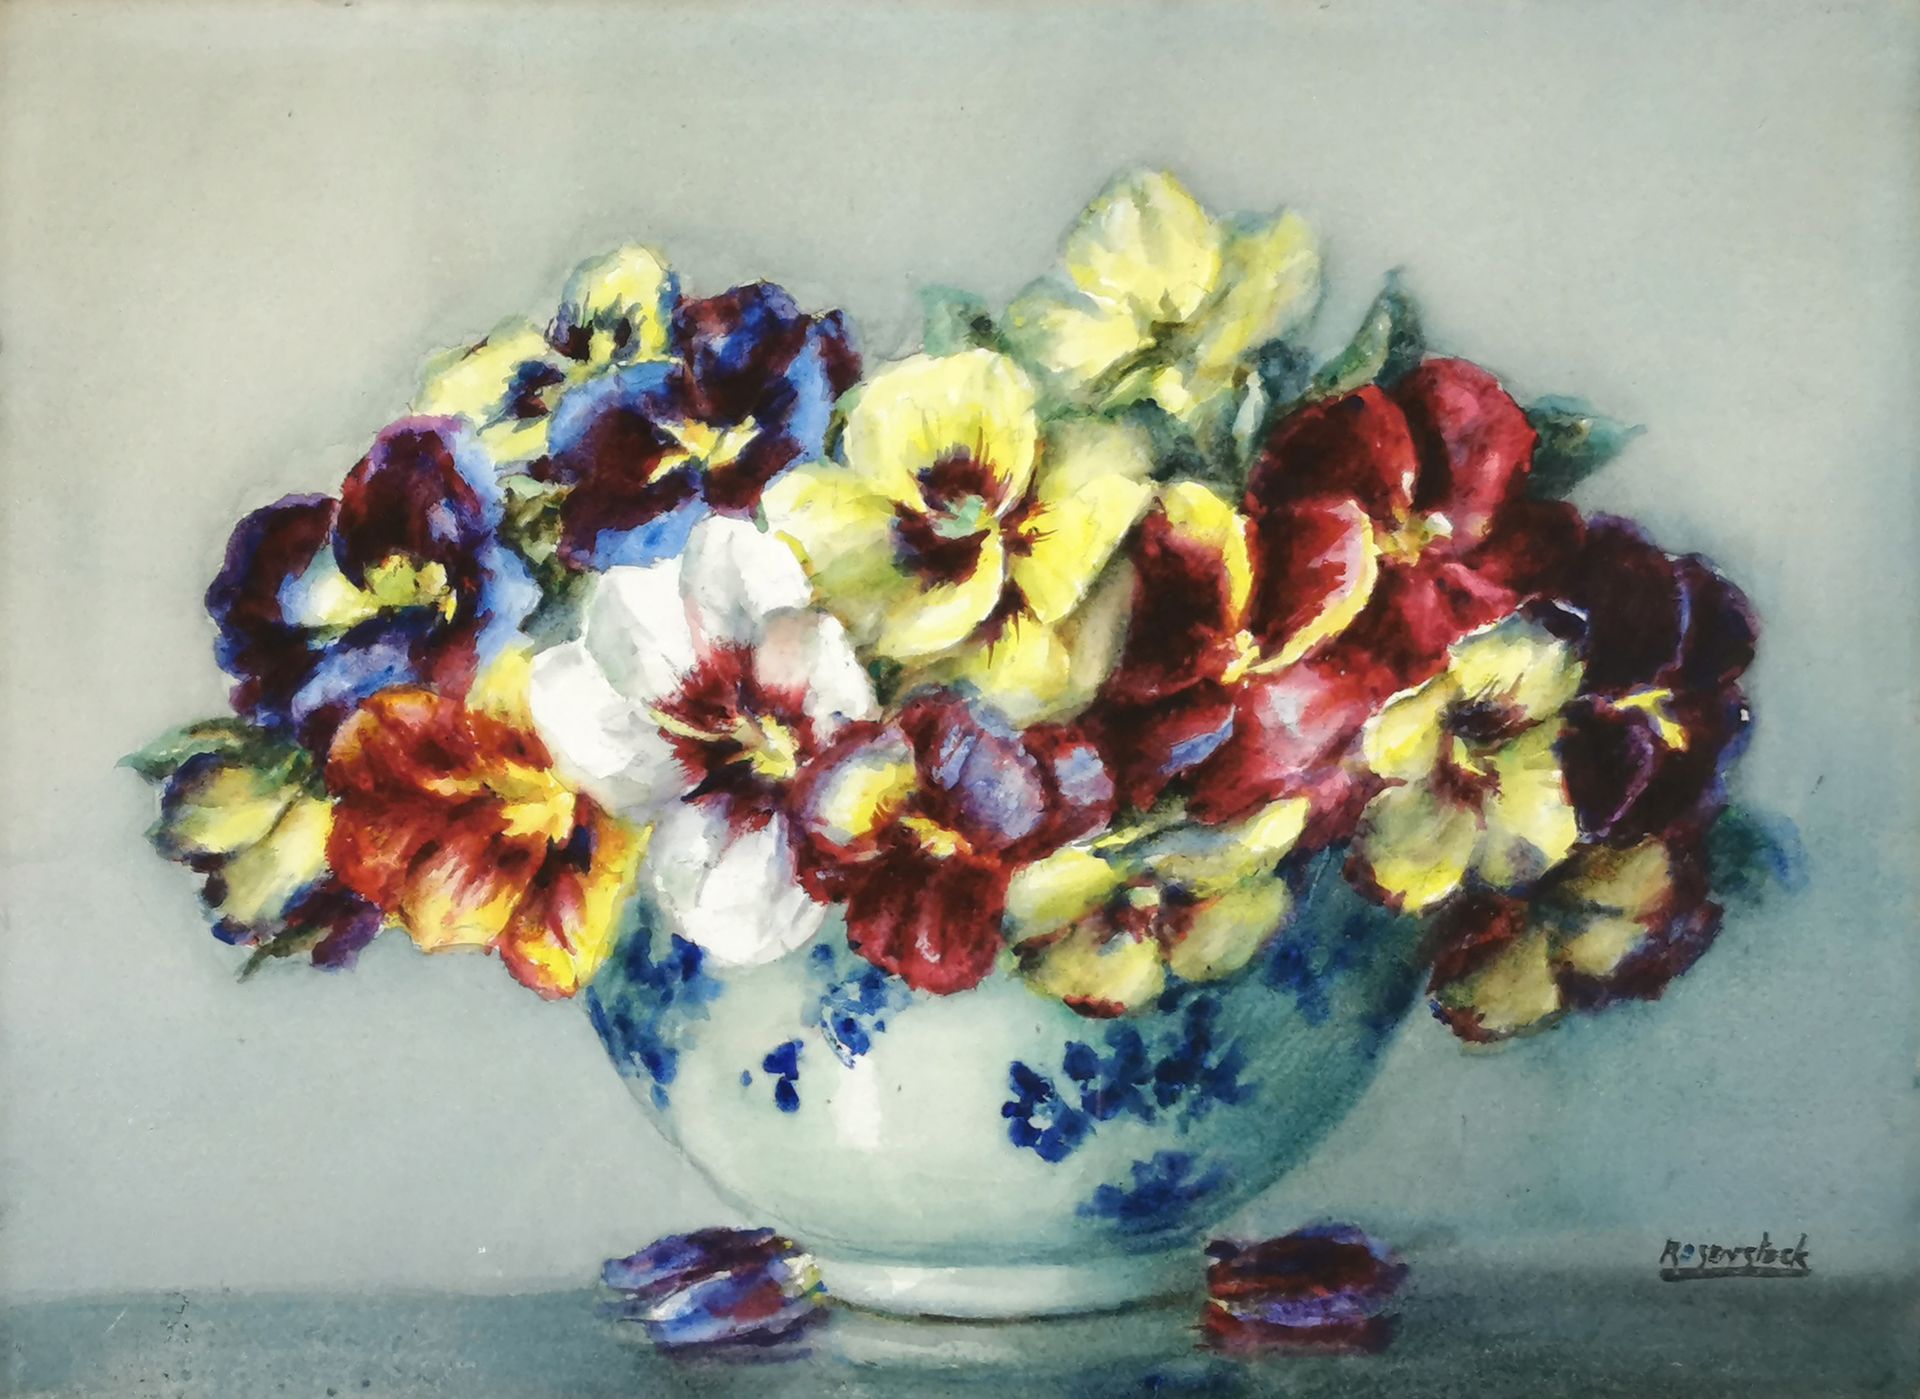 Null 伊索多-罗森斯托克 (1880-1956)

思想的花束

纸上水彩画，已签名

27 x 37 cm 正在观看

有框